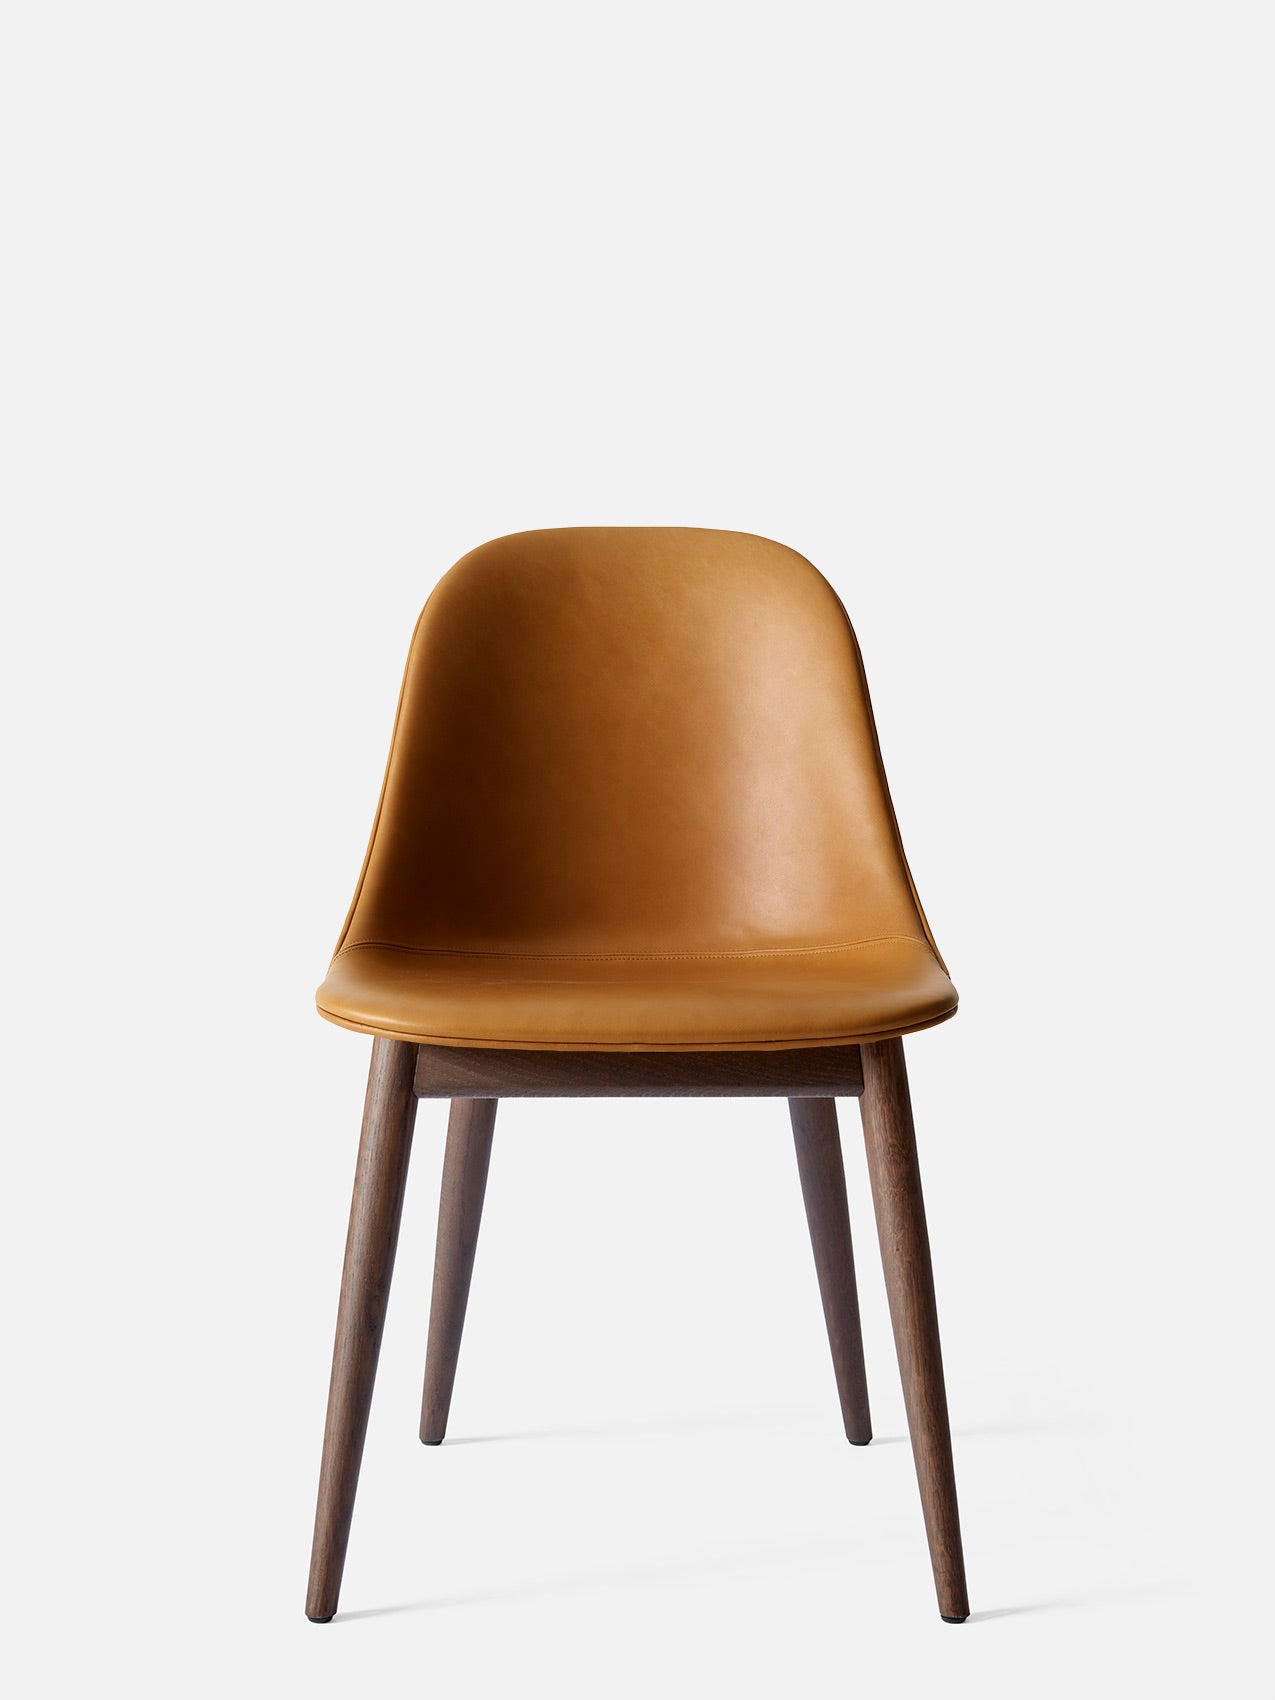 Harbour Side Chair, Upholstered-Chair-Norm Architects-Dining Height (Seat 17.7in H)/Dark Oak-0250 Cognac/Dakar-menu-minimalist-modern-danish-design-home-decor